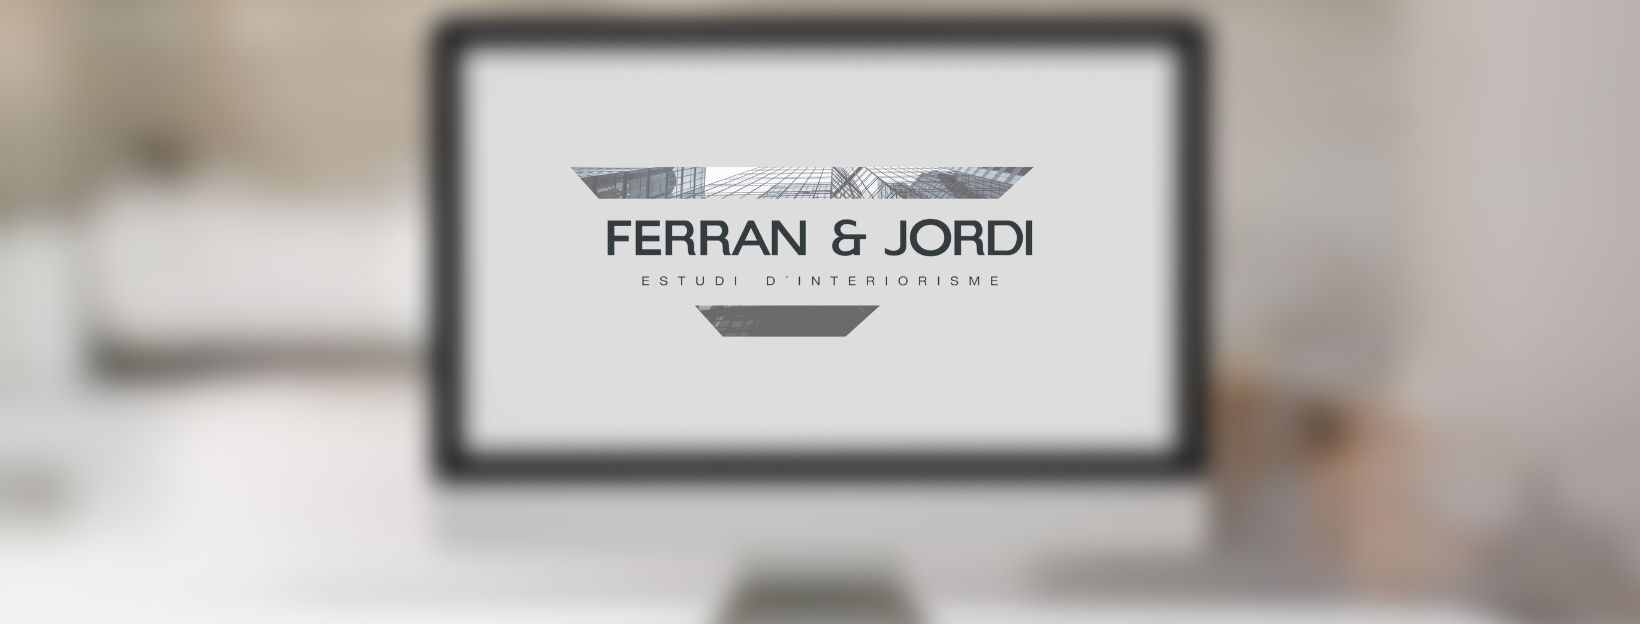 SEO for Ferran & Jordi’s website